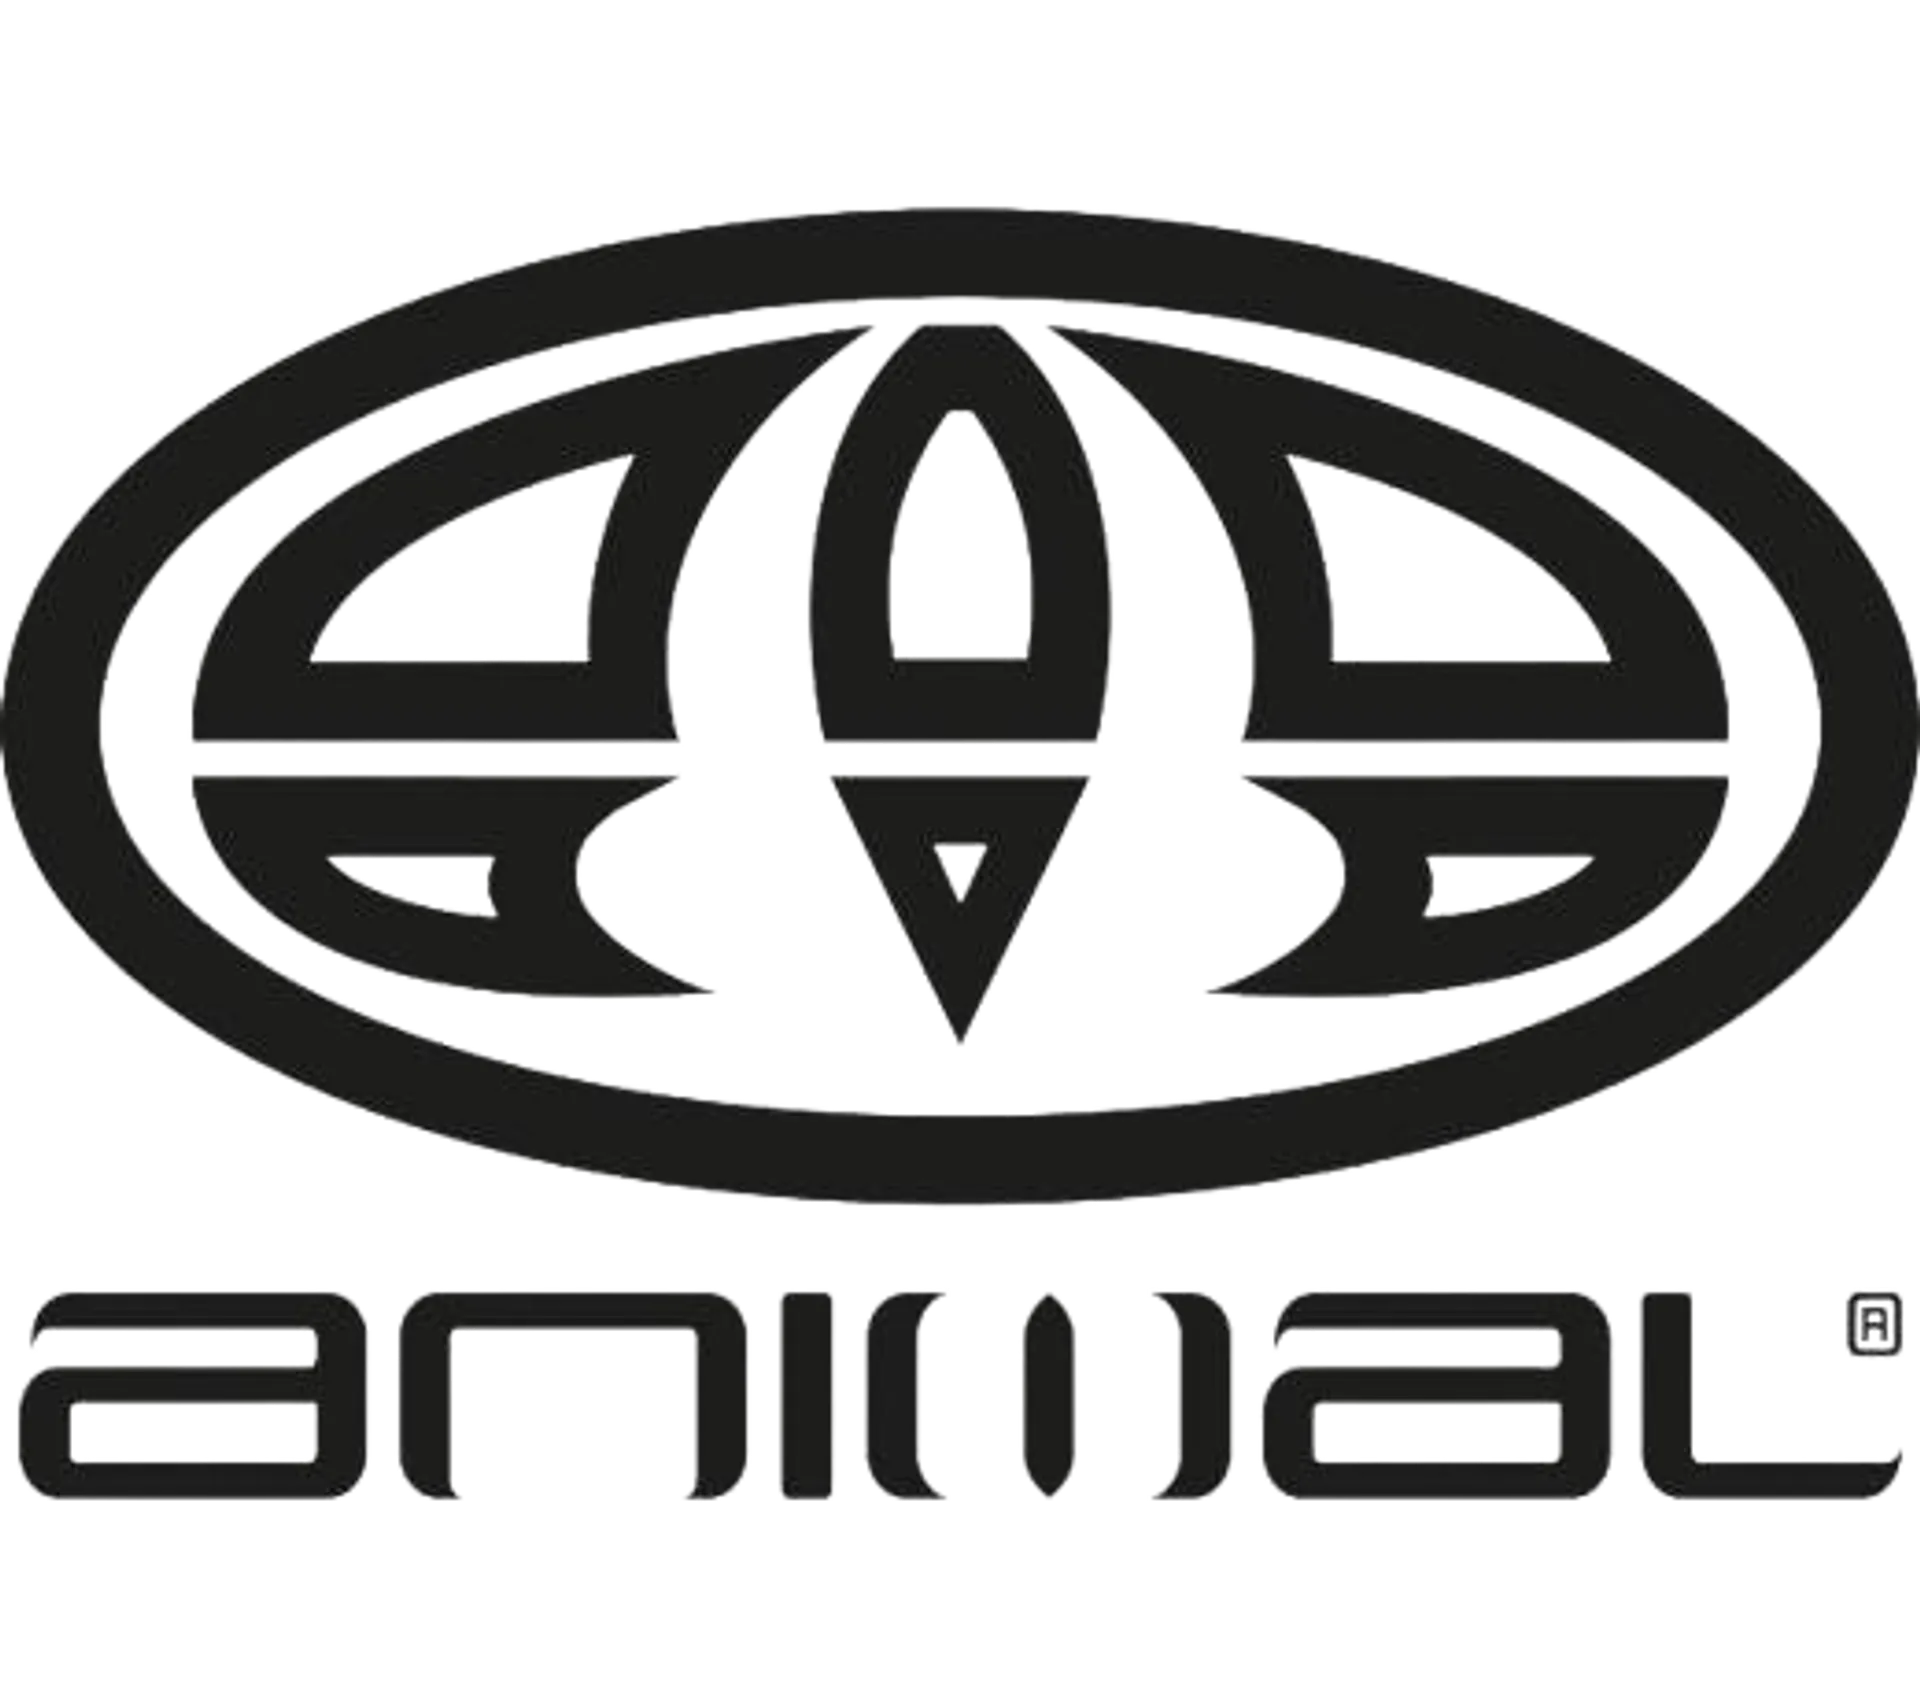 ANIMAL logo. Current catalogue